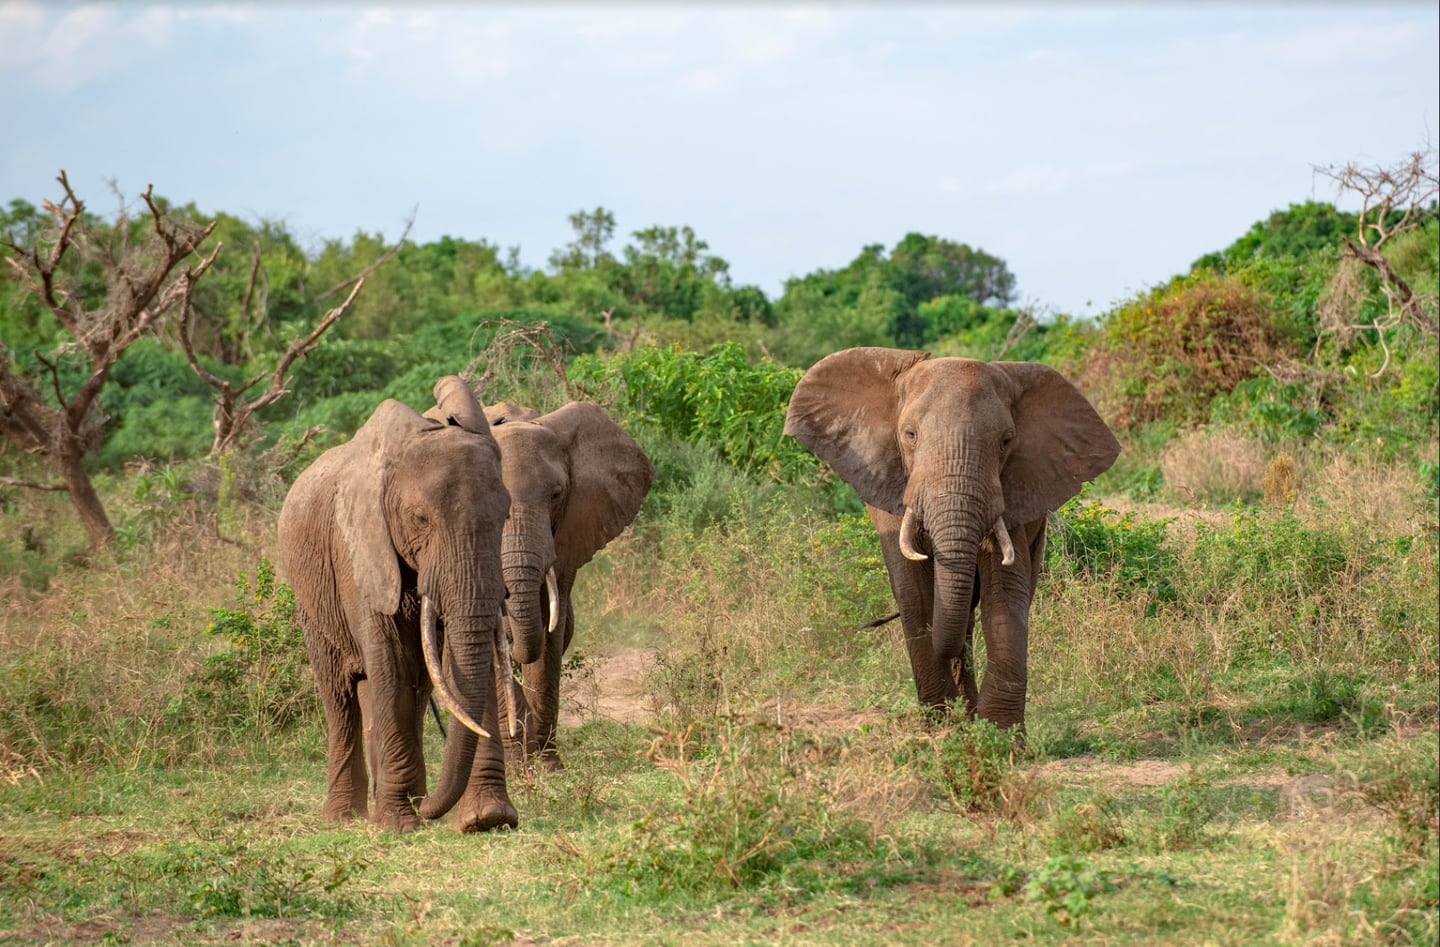 Elephants in Tanzania’s Lake Manyara National Park having a dust bath